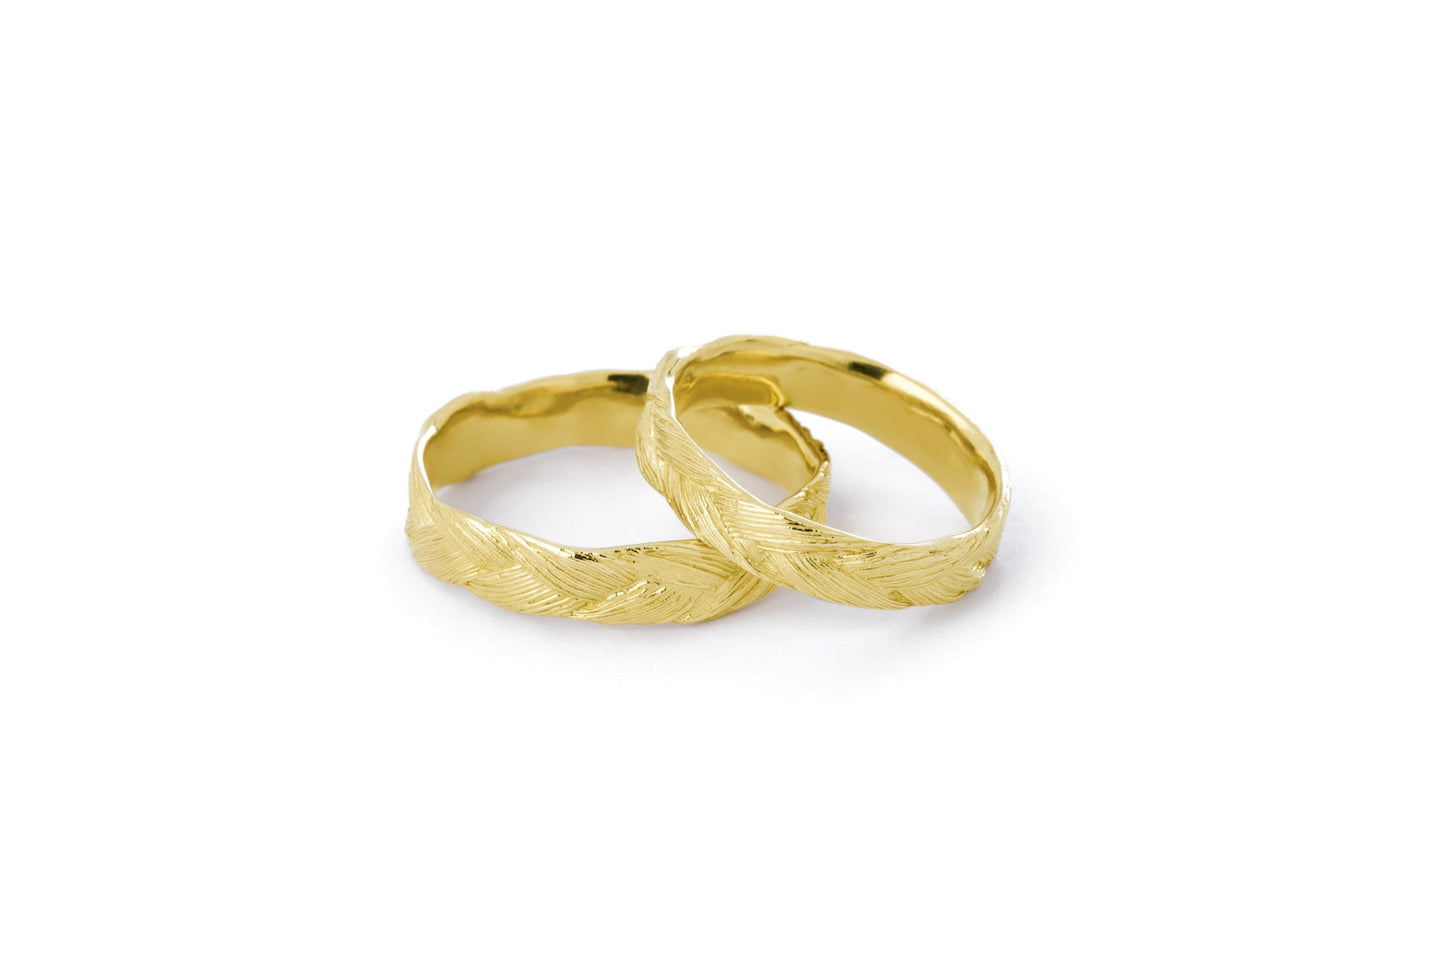 Braid Wedding Ring - Gold thick braid